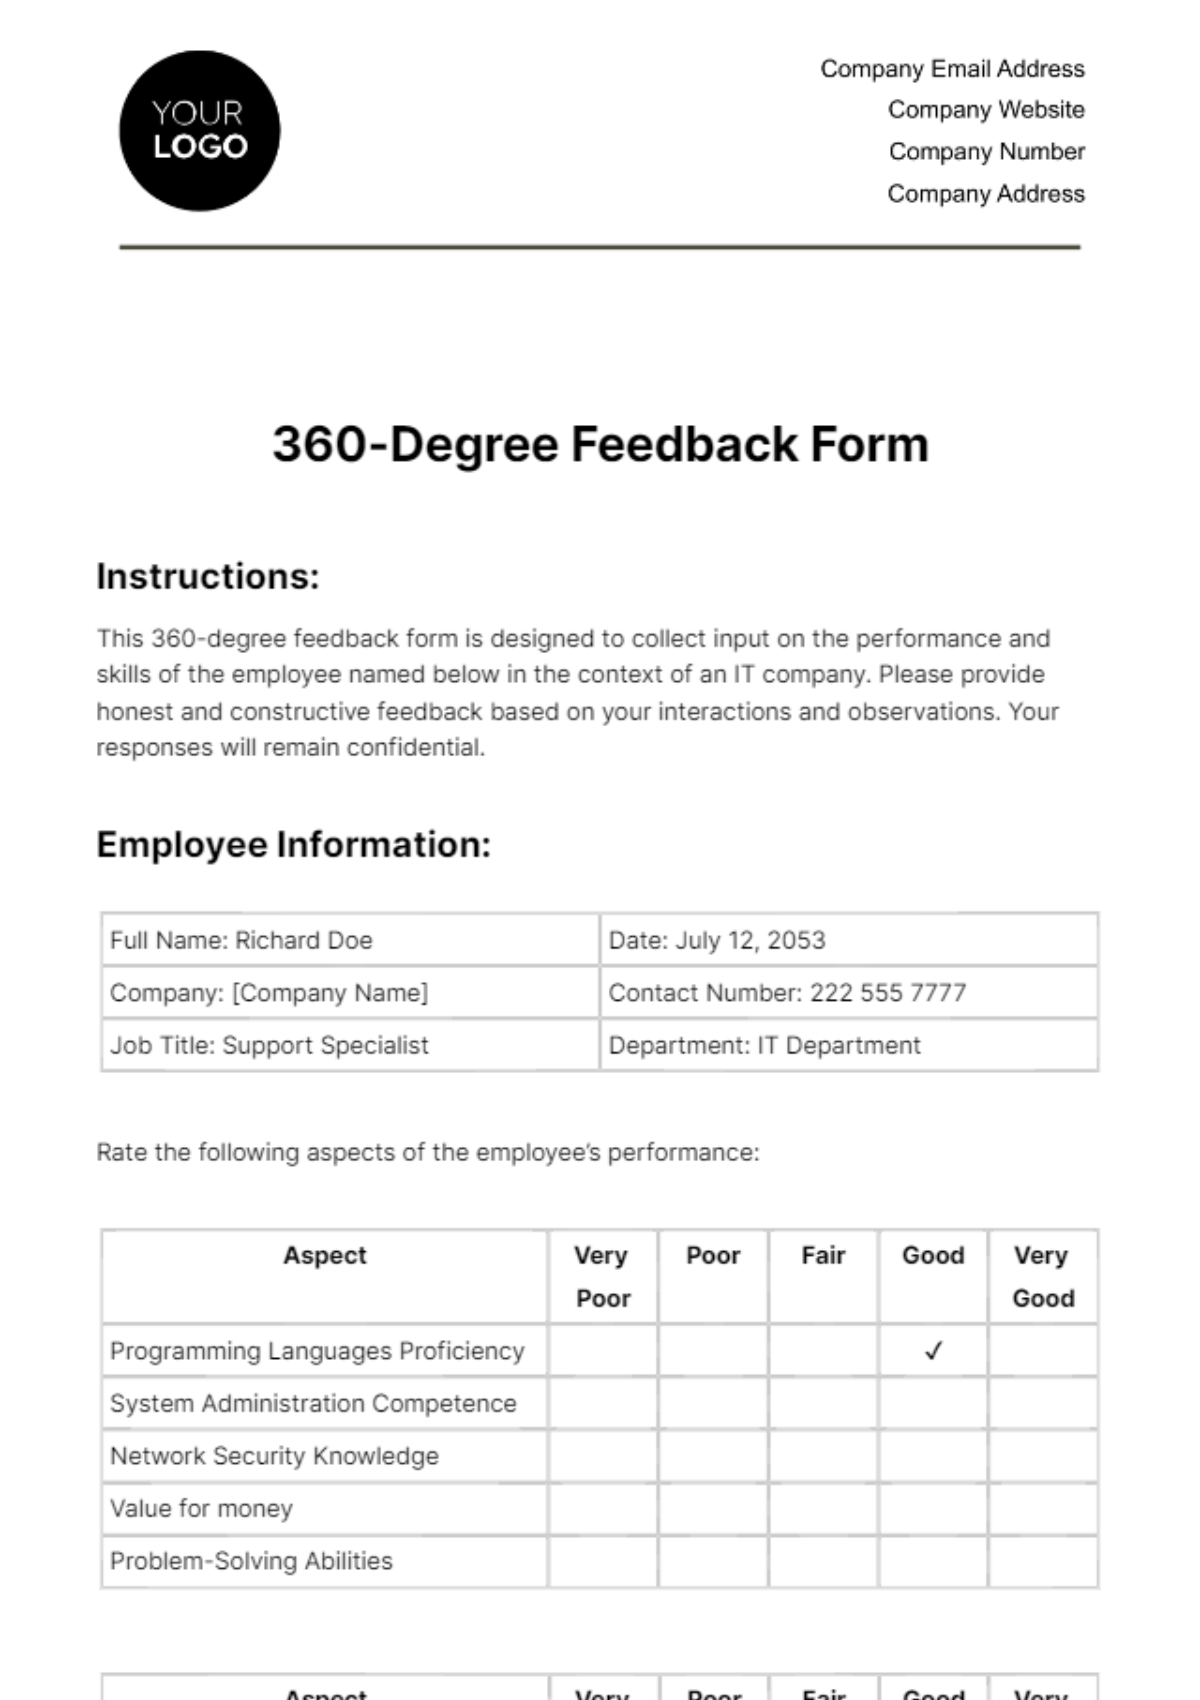 360-Degree Feedback Form HR Template